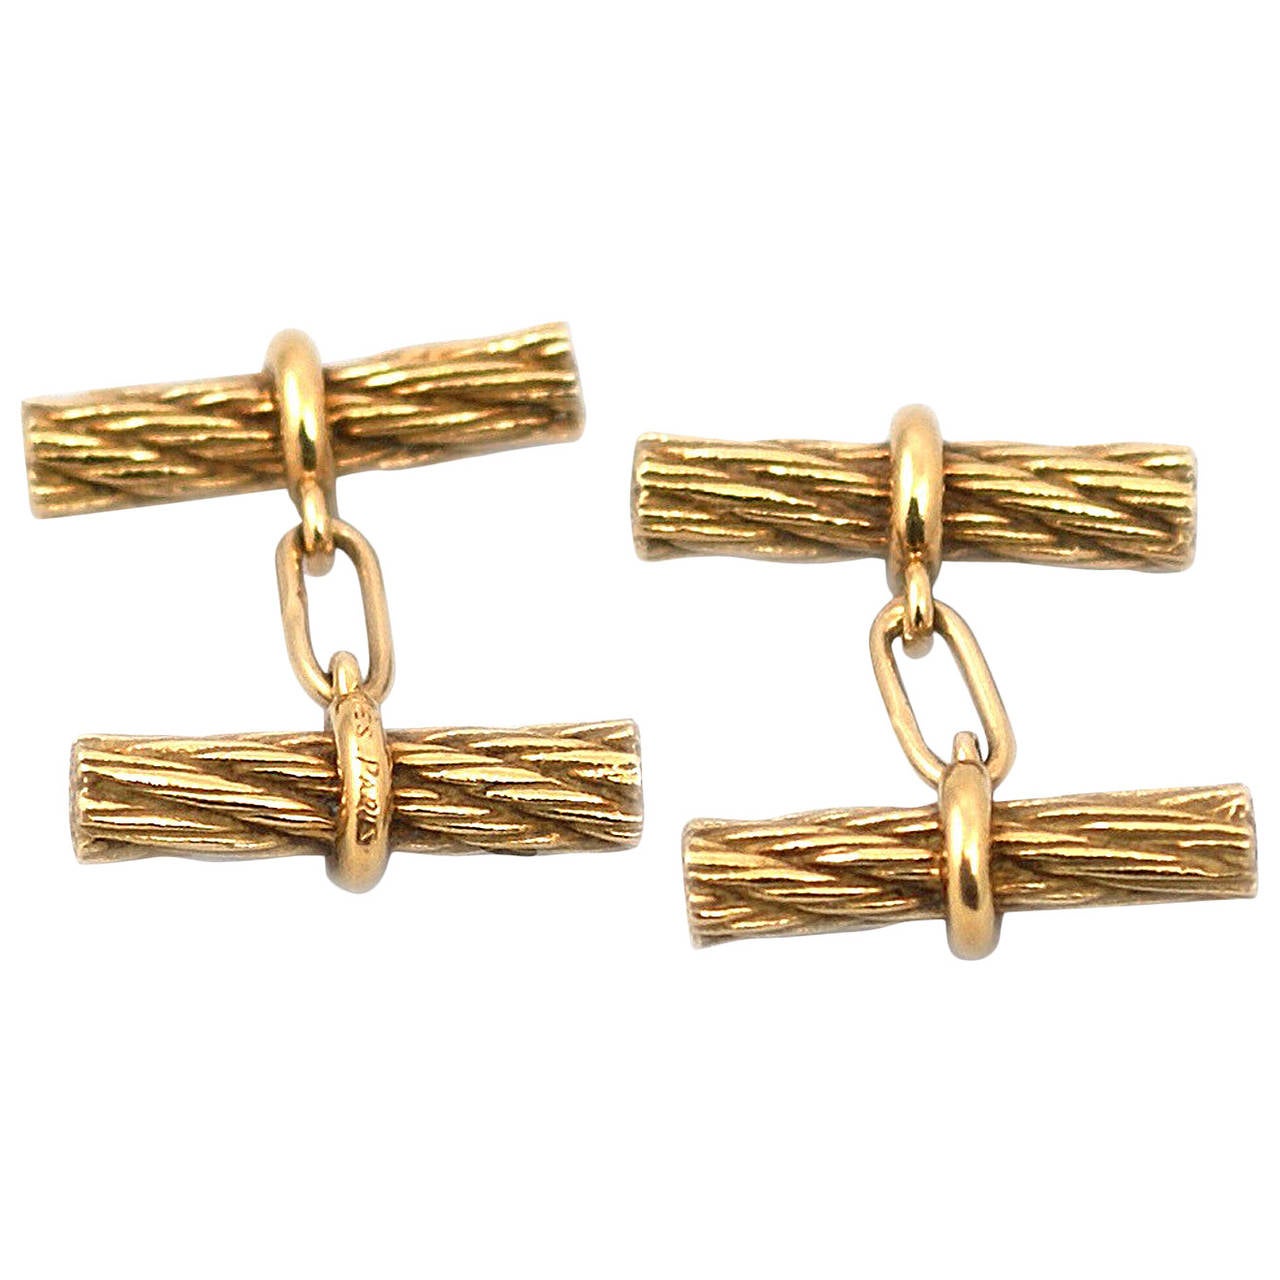 Hermes Gold Rope Cufflinks